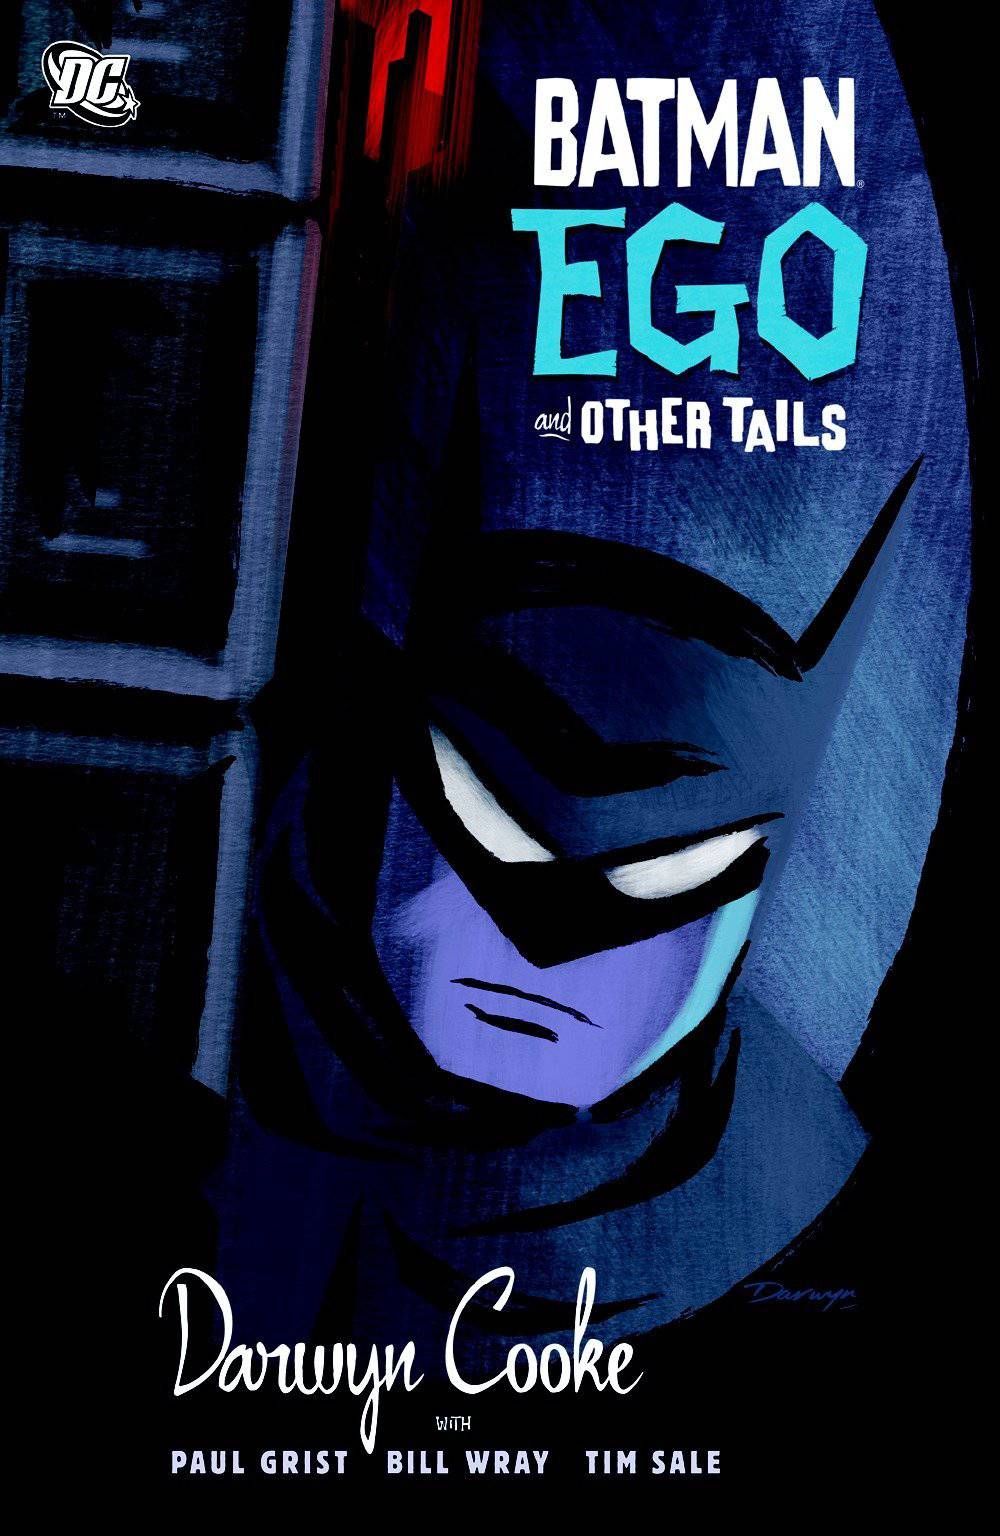 Batman Ego and Other Tails - gabescaveccc